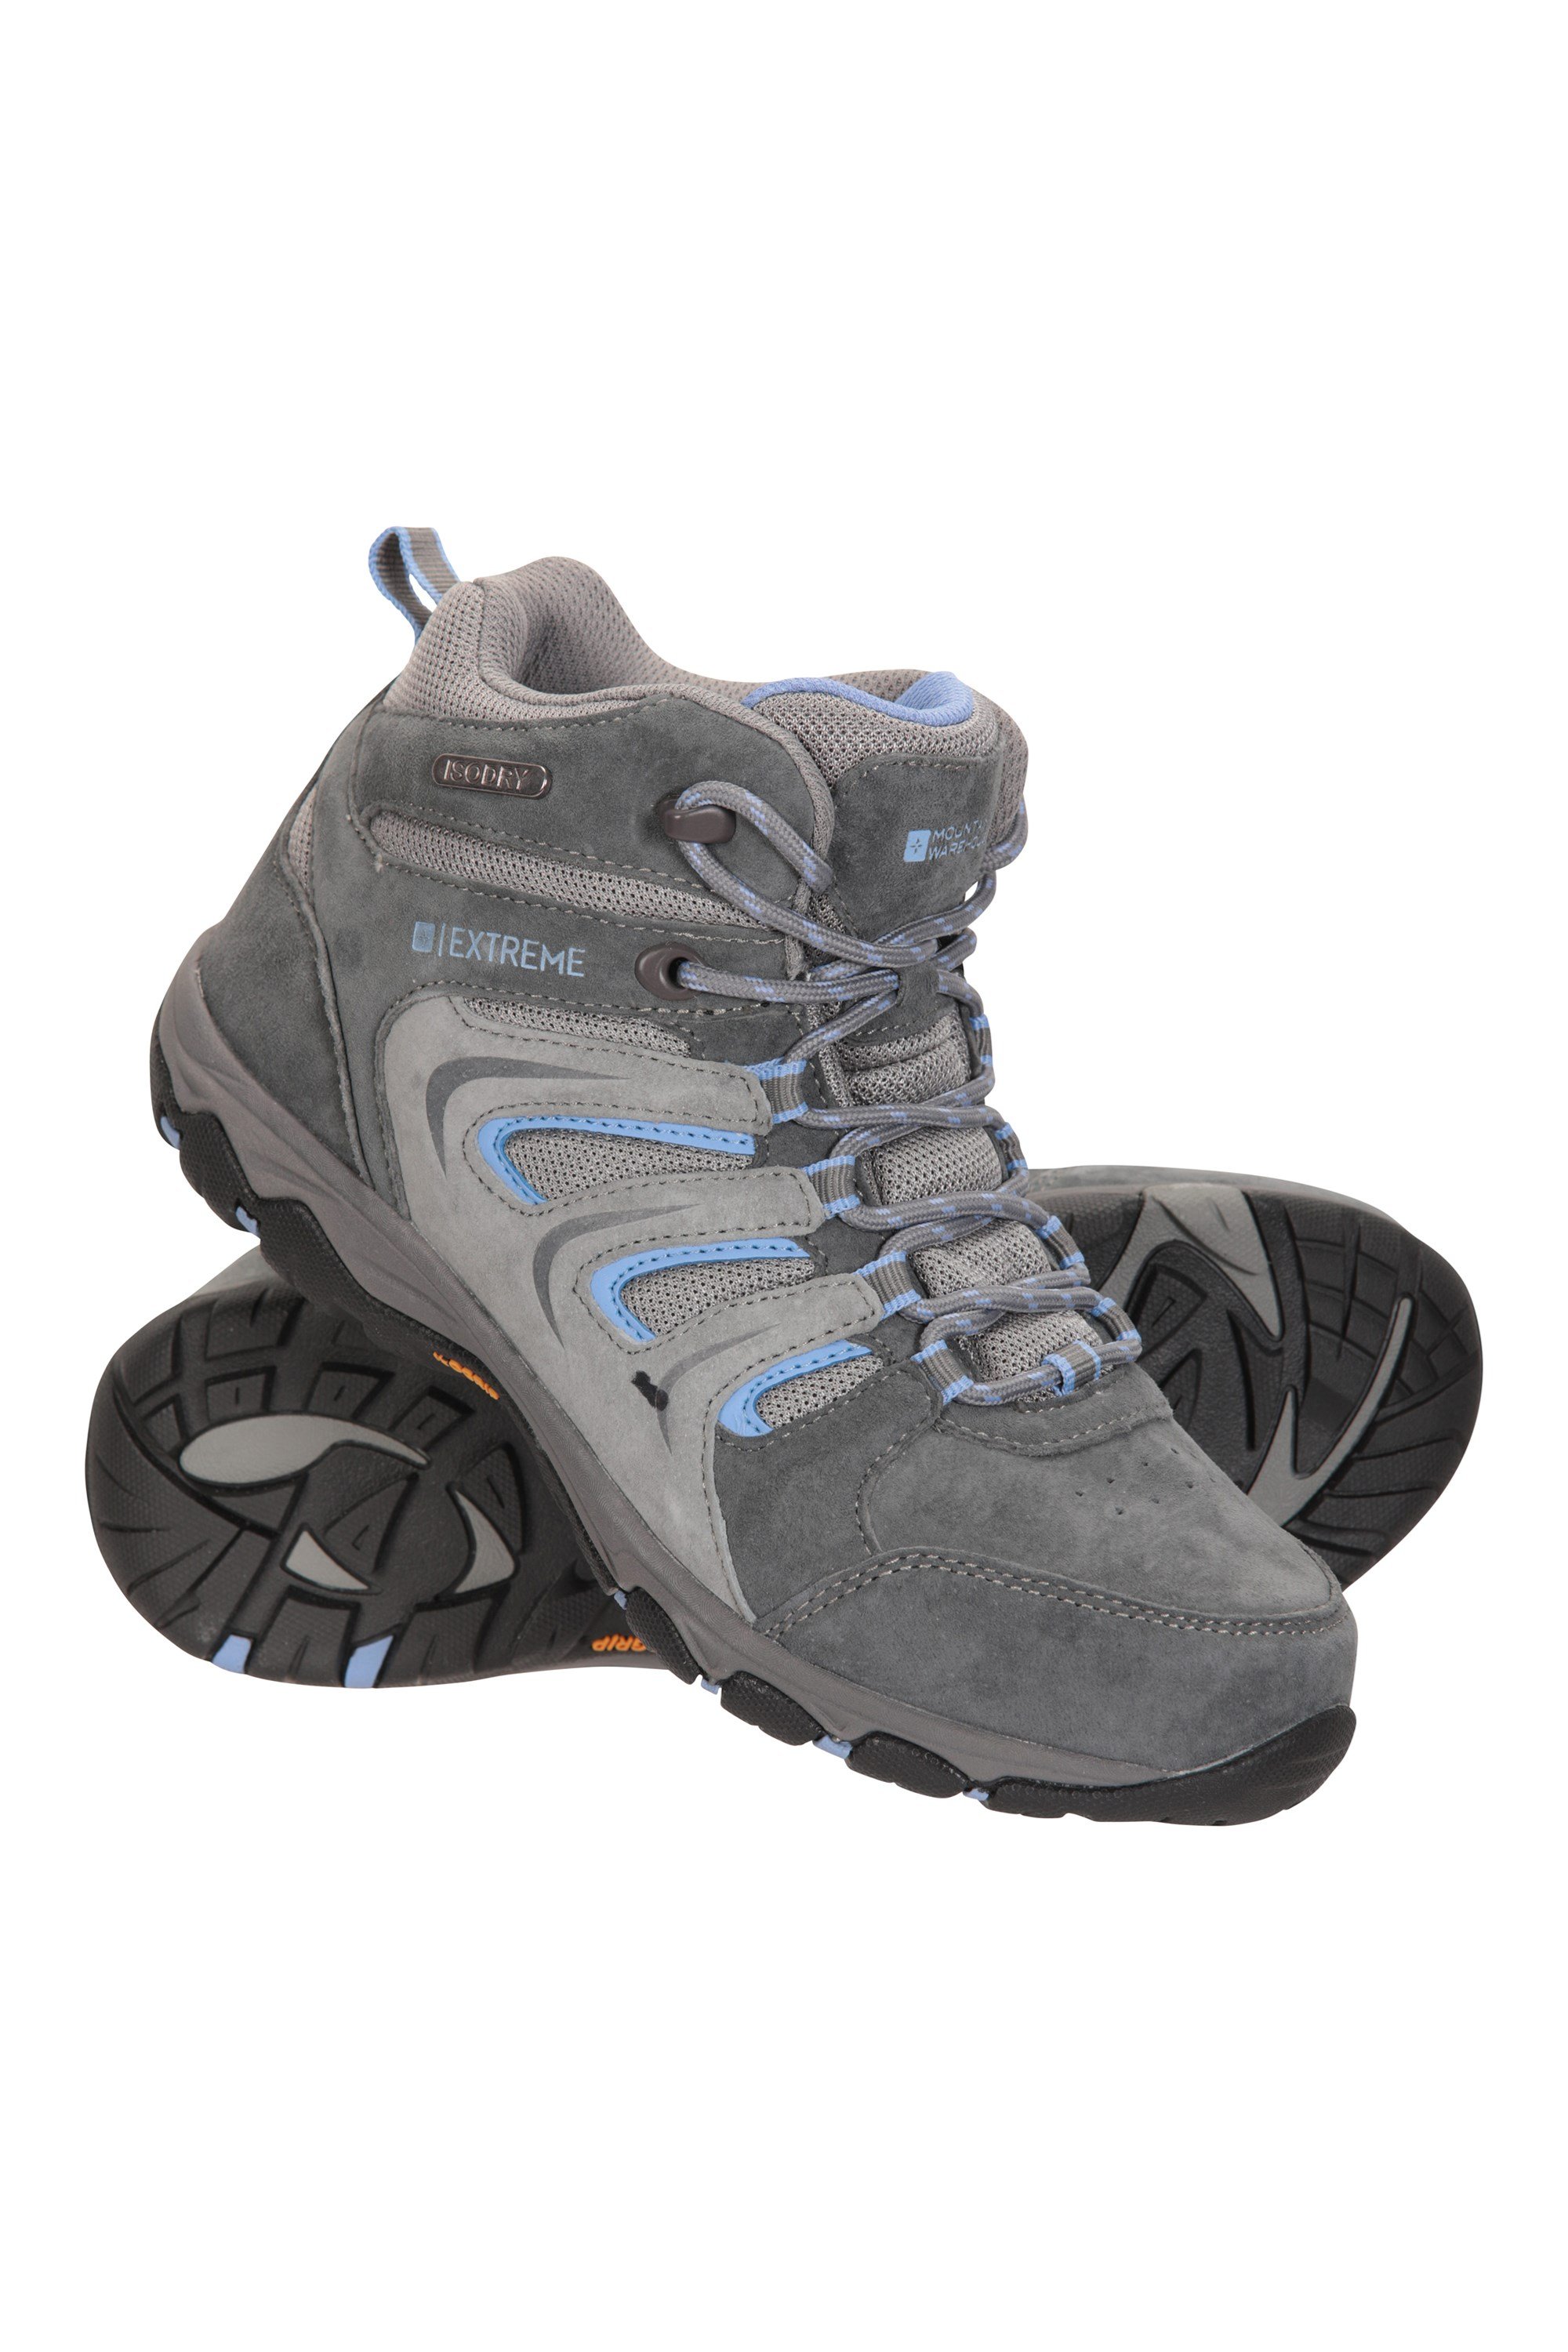 Mountain Warehouse Mountain Warehouse IsoDry Hiking Shoes Womens 10 Waterproof SB7 